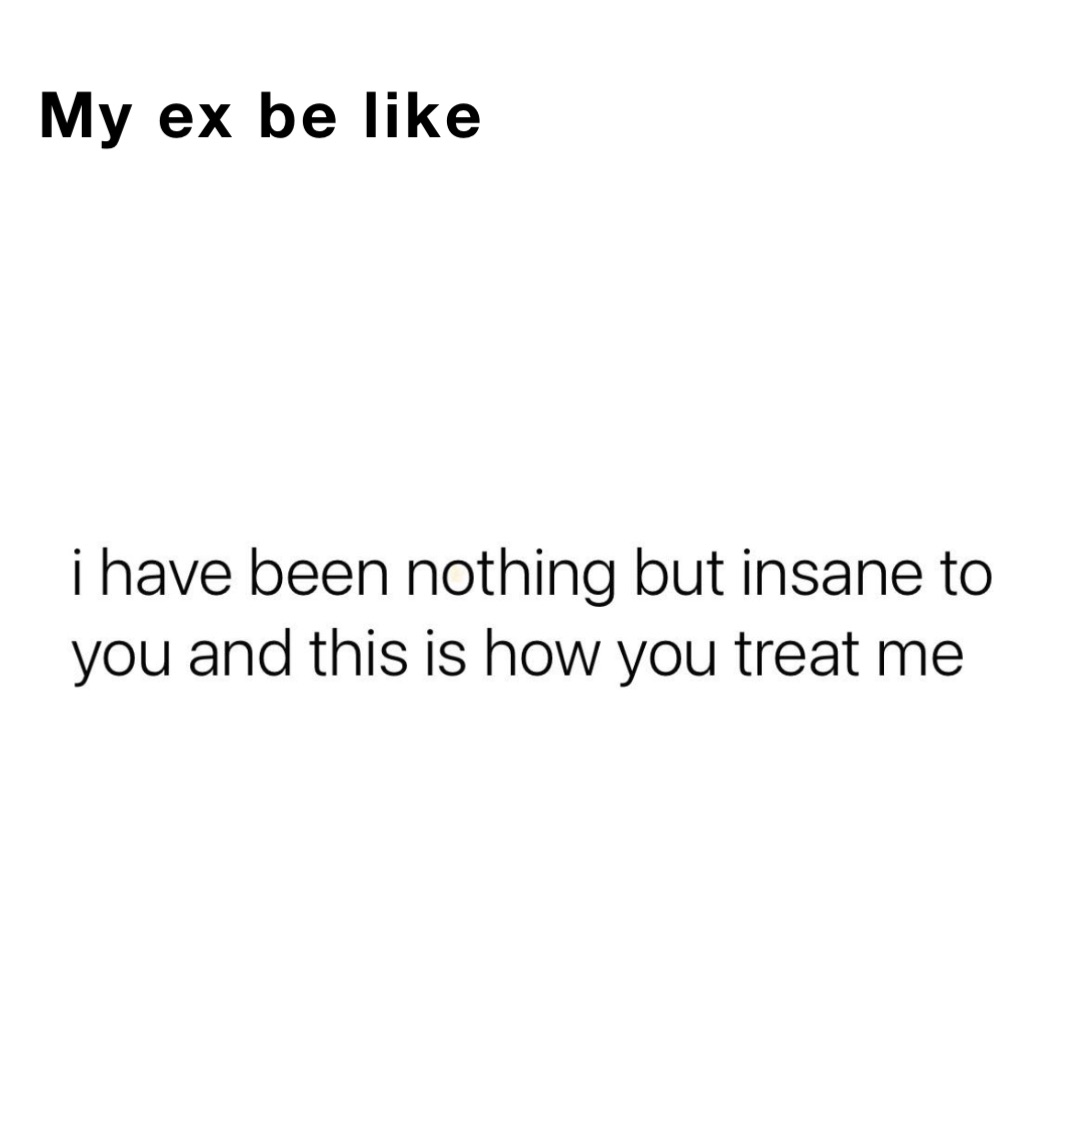 My ex be like